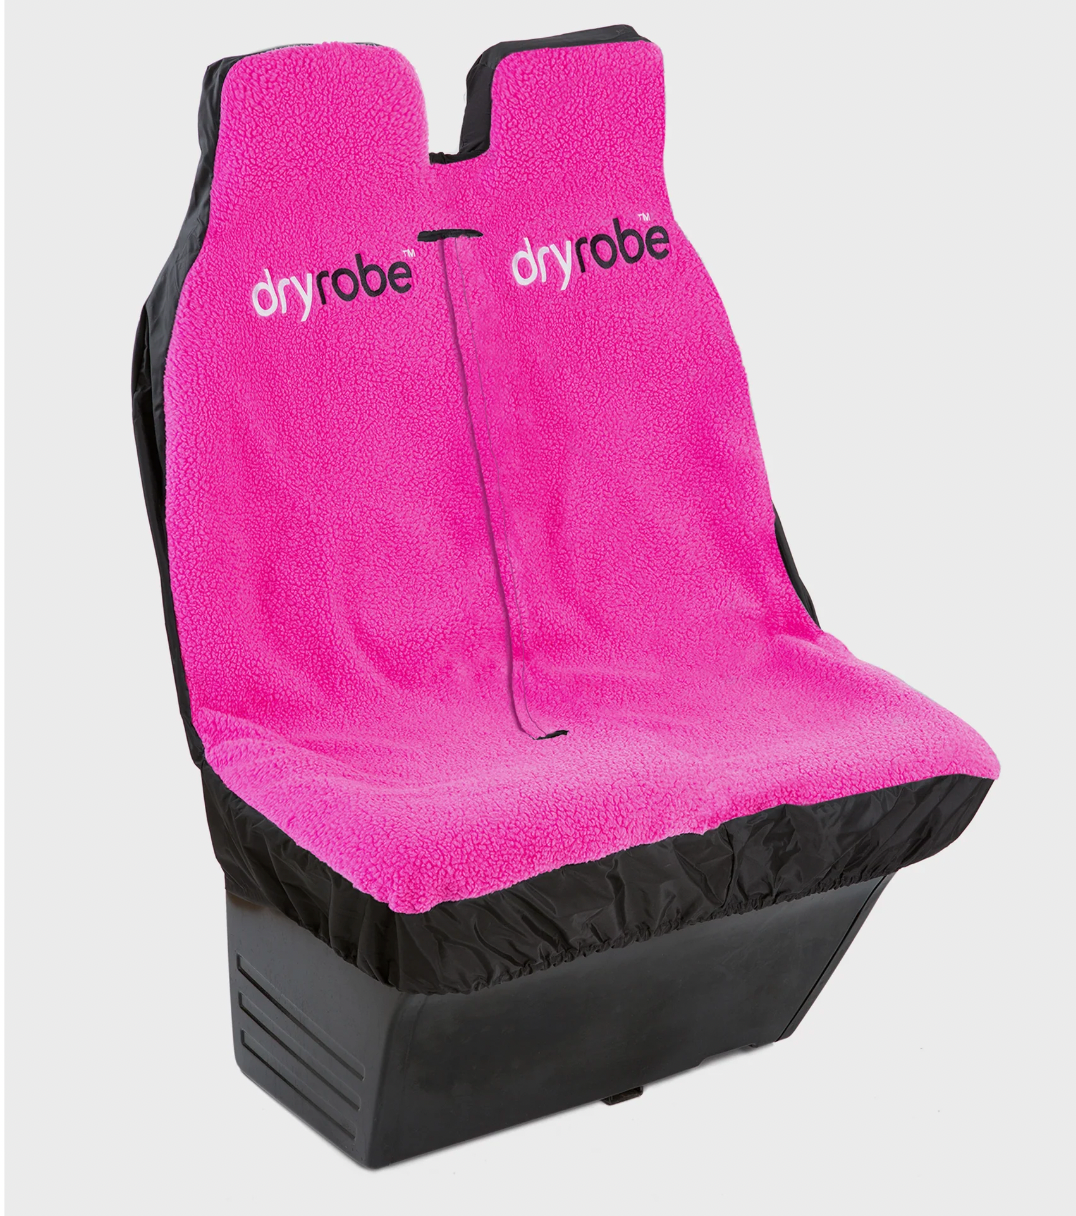 dryrobe Double Van Seat Cover- pink -